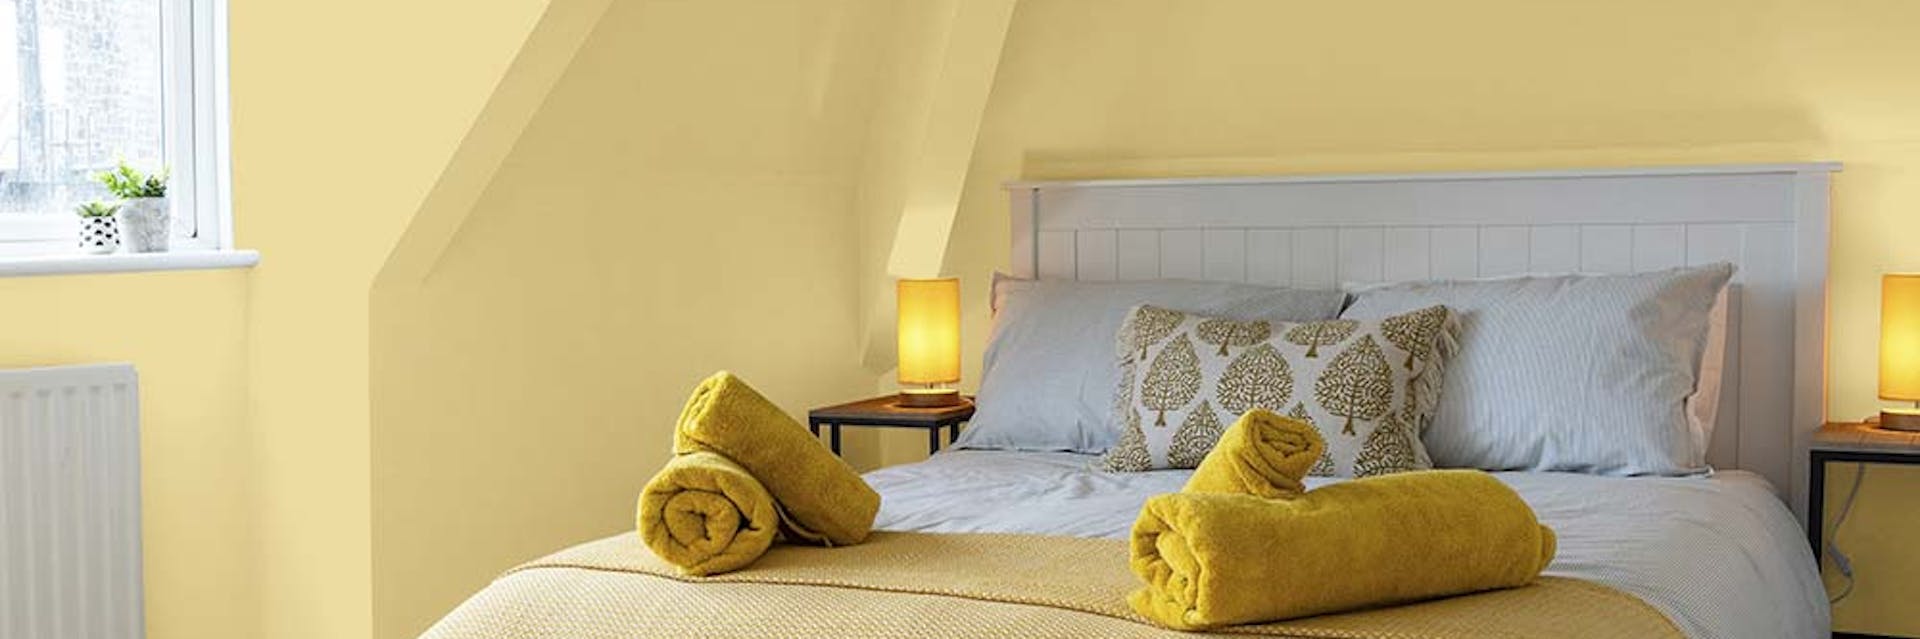 soft yellow bedroom walls 